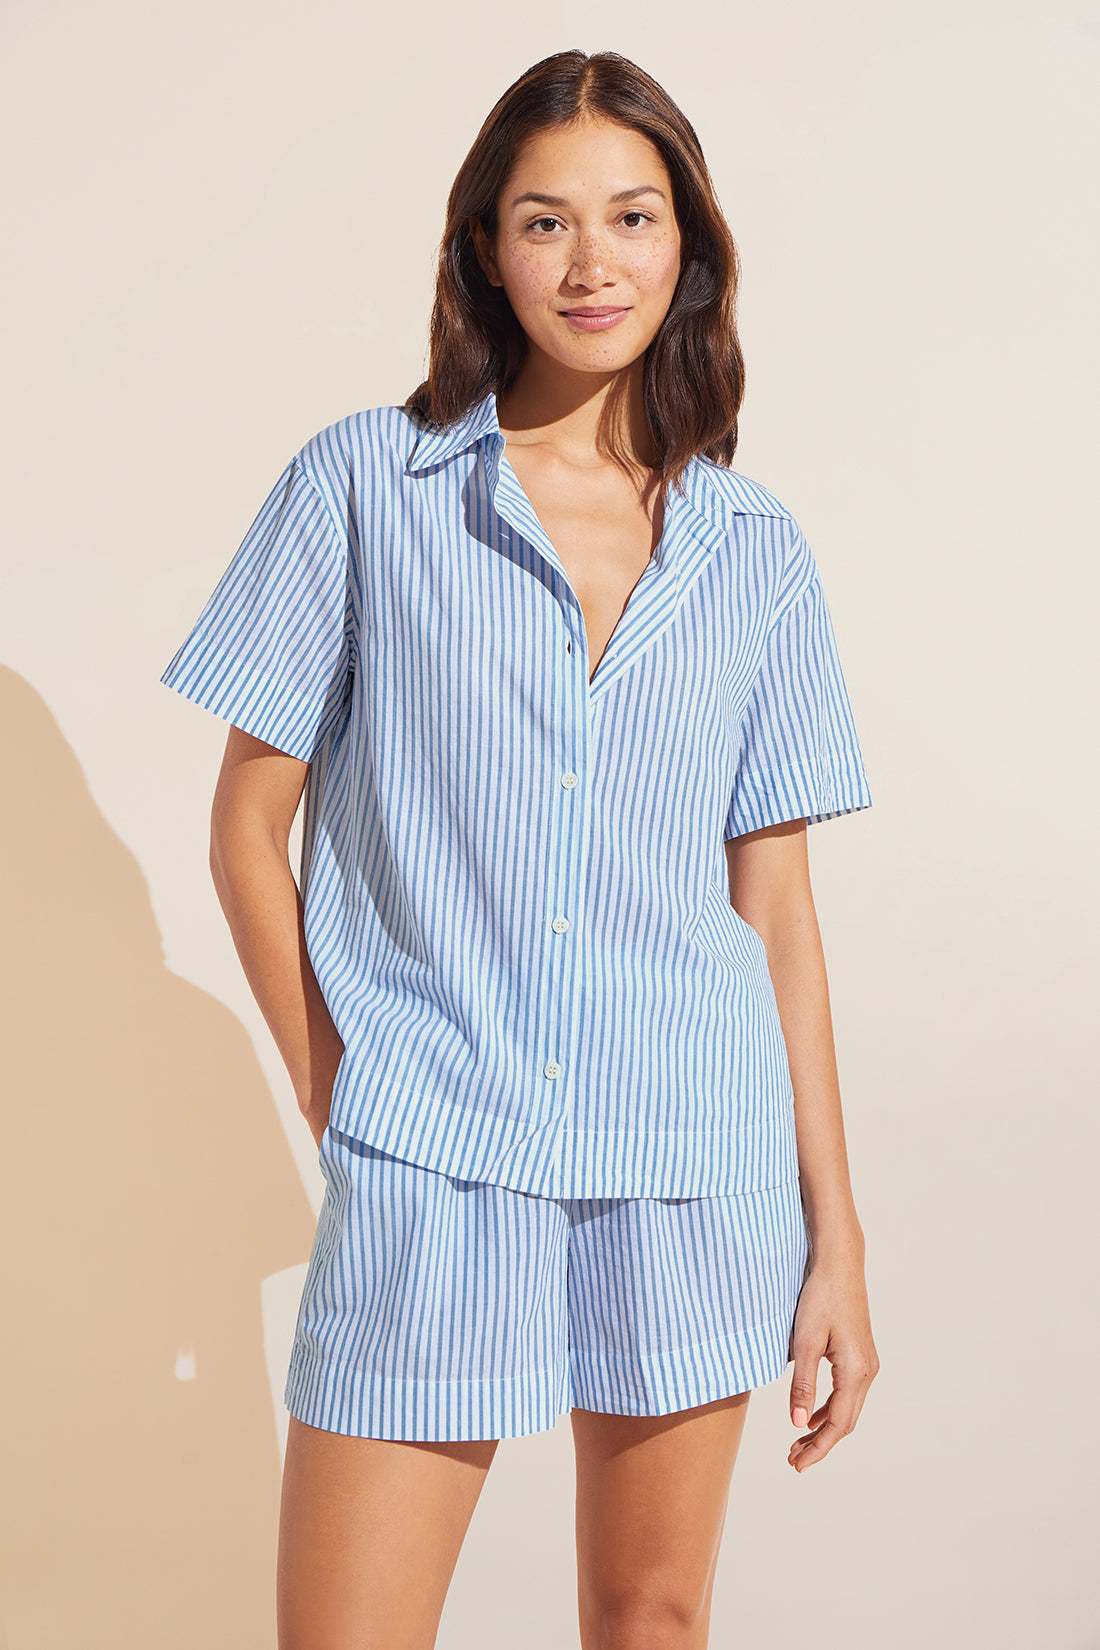 Women's Organic Cotton Print Pajamas Set